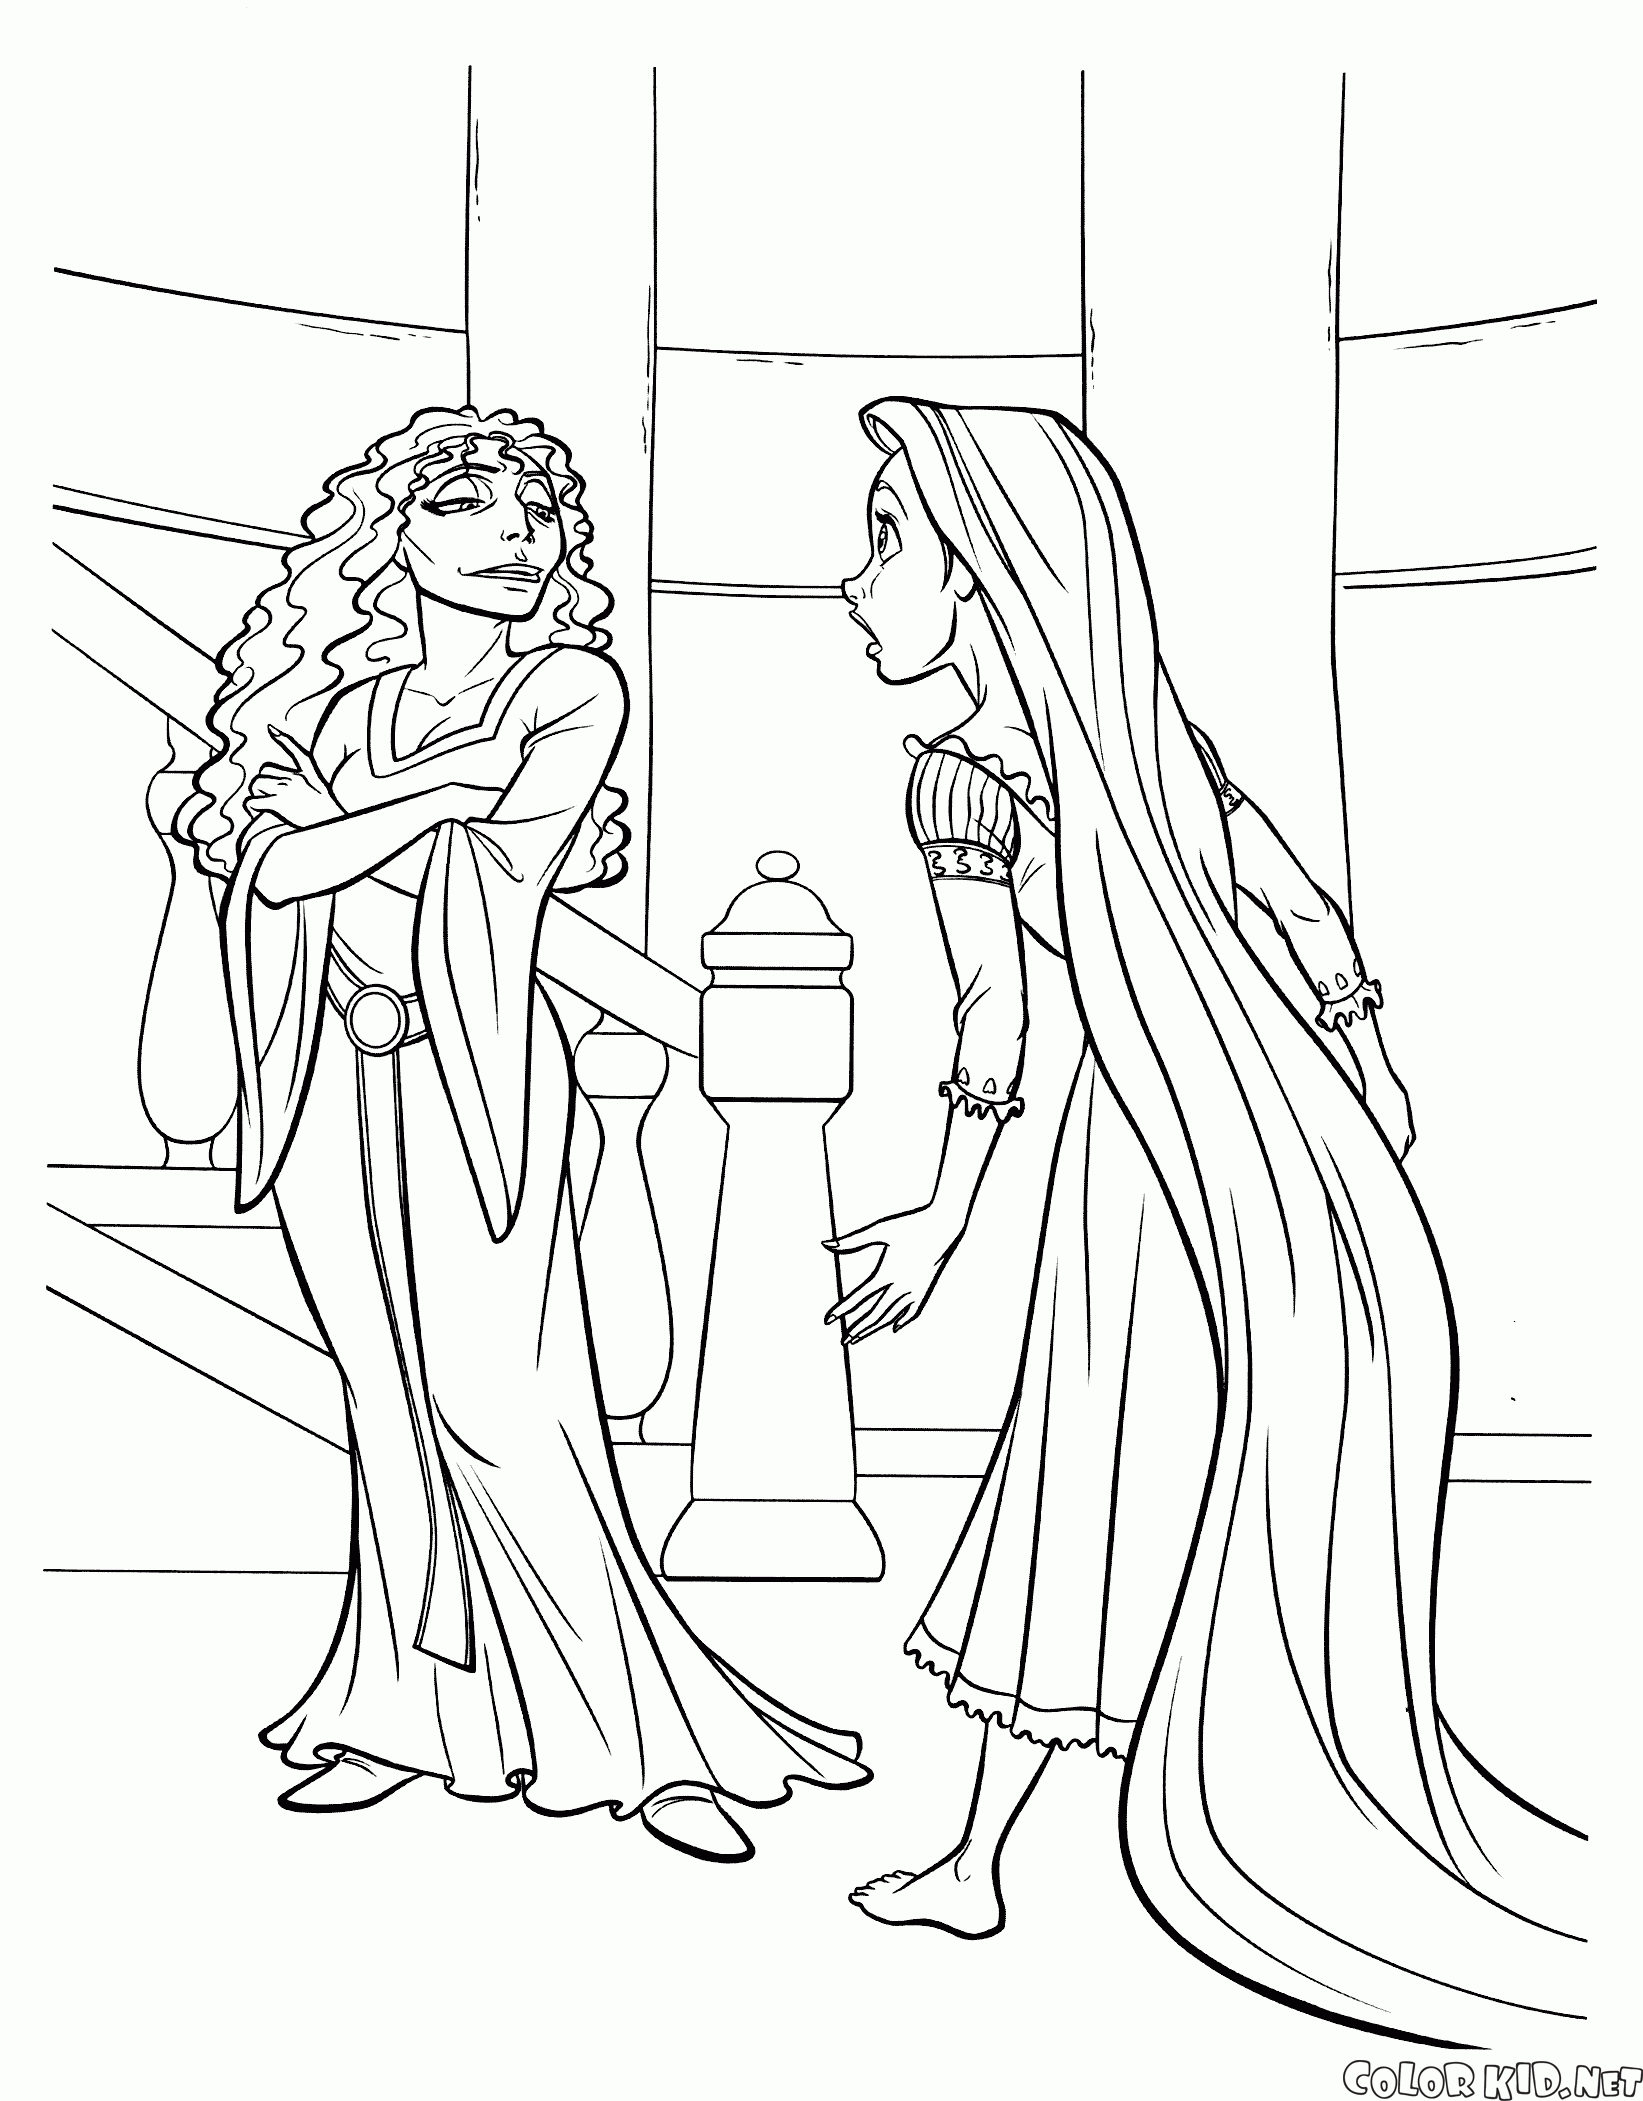 Madre Gothel e Rapunzel